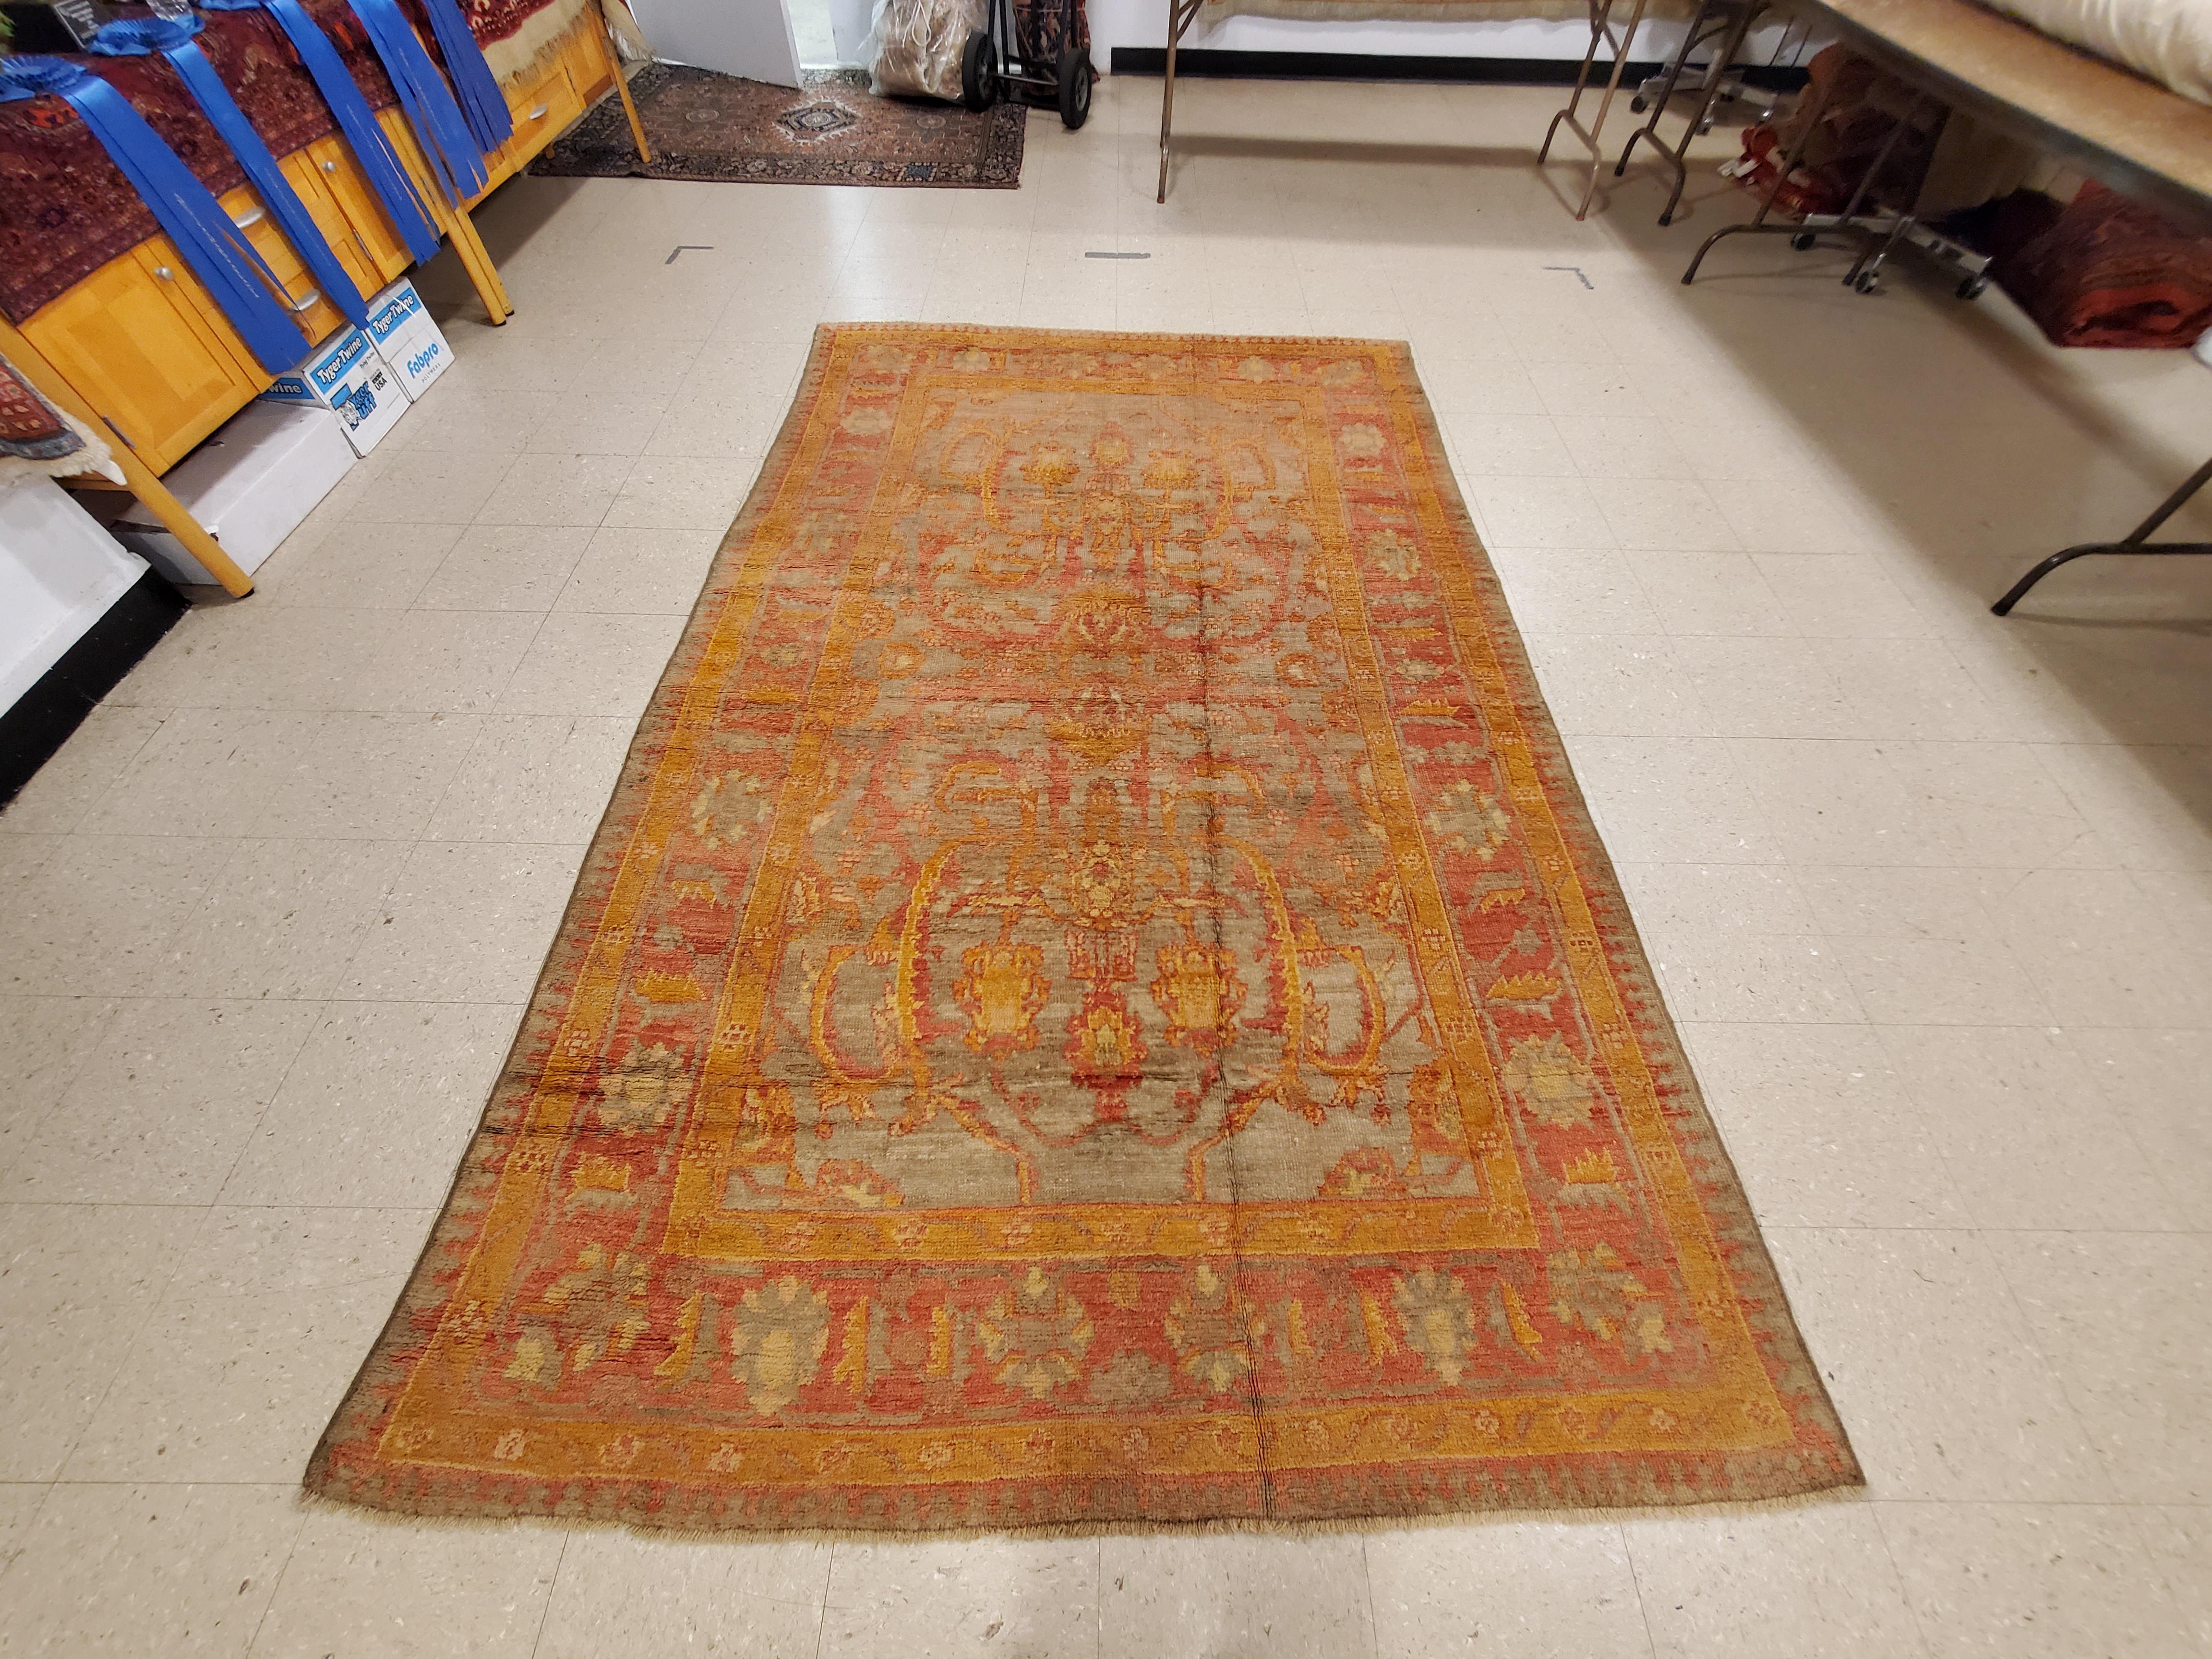 Antique Oushak Carpet, Handmade Turkish Oriental Rug, Saffron, Coral, Light Blue For Sale 7